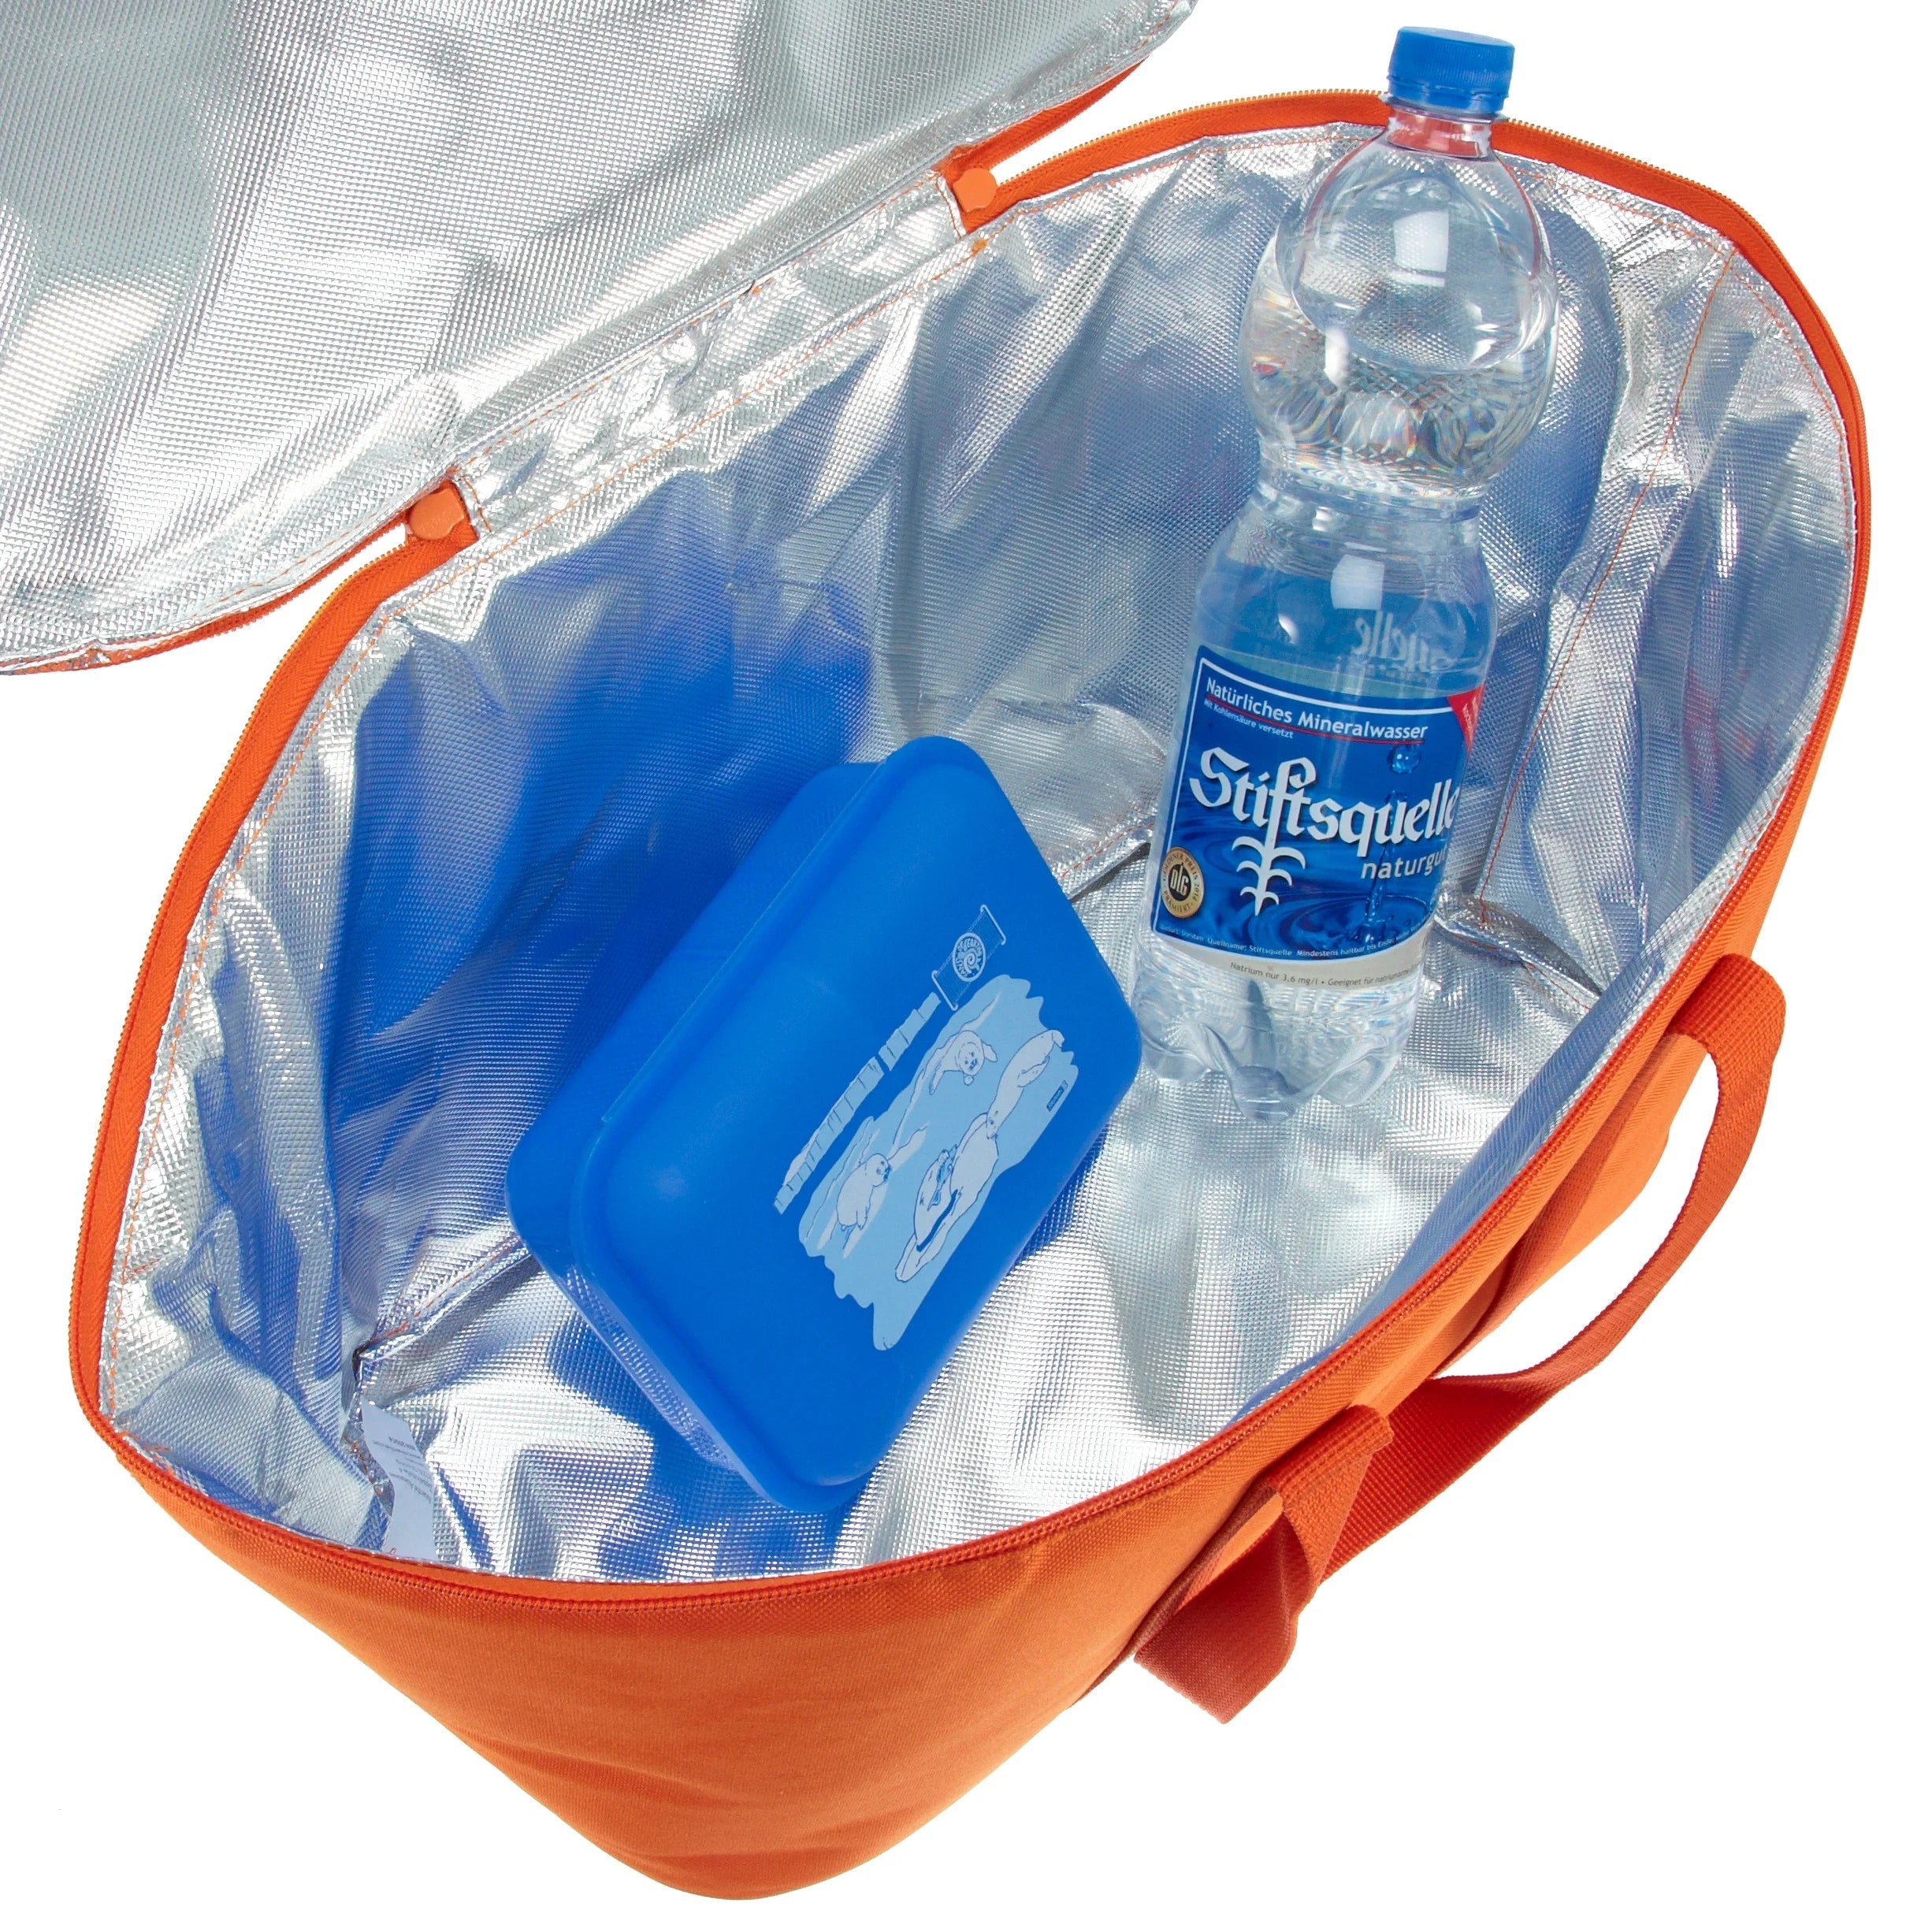 Reisenthel Shopping Coolerbag cooler bag 44 cm - Twist Apricot